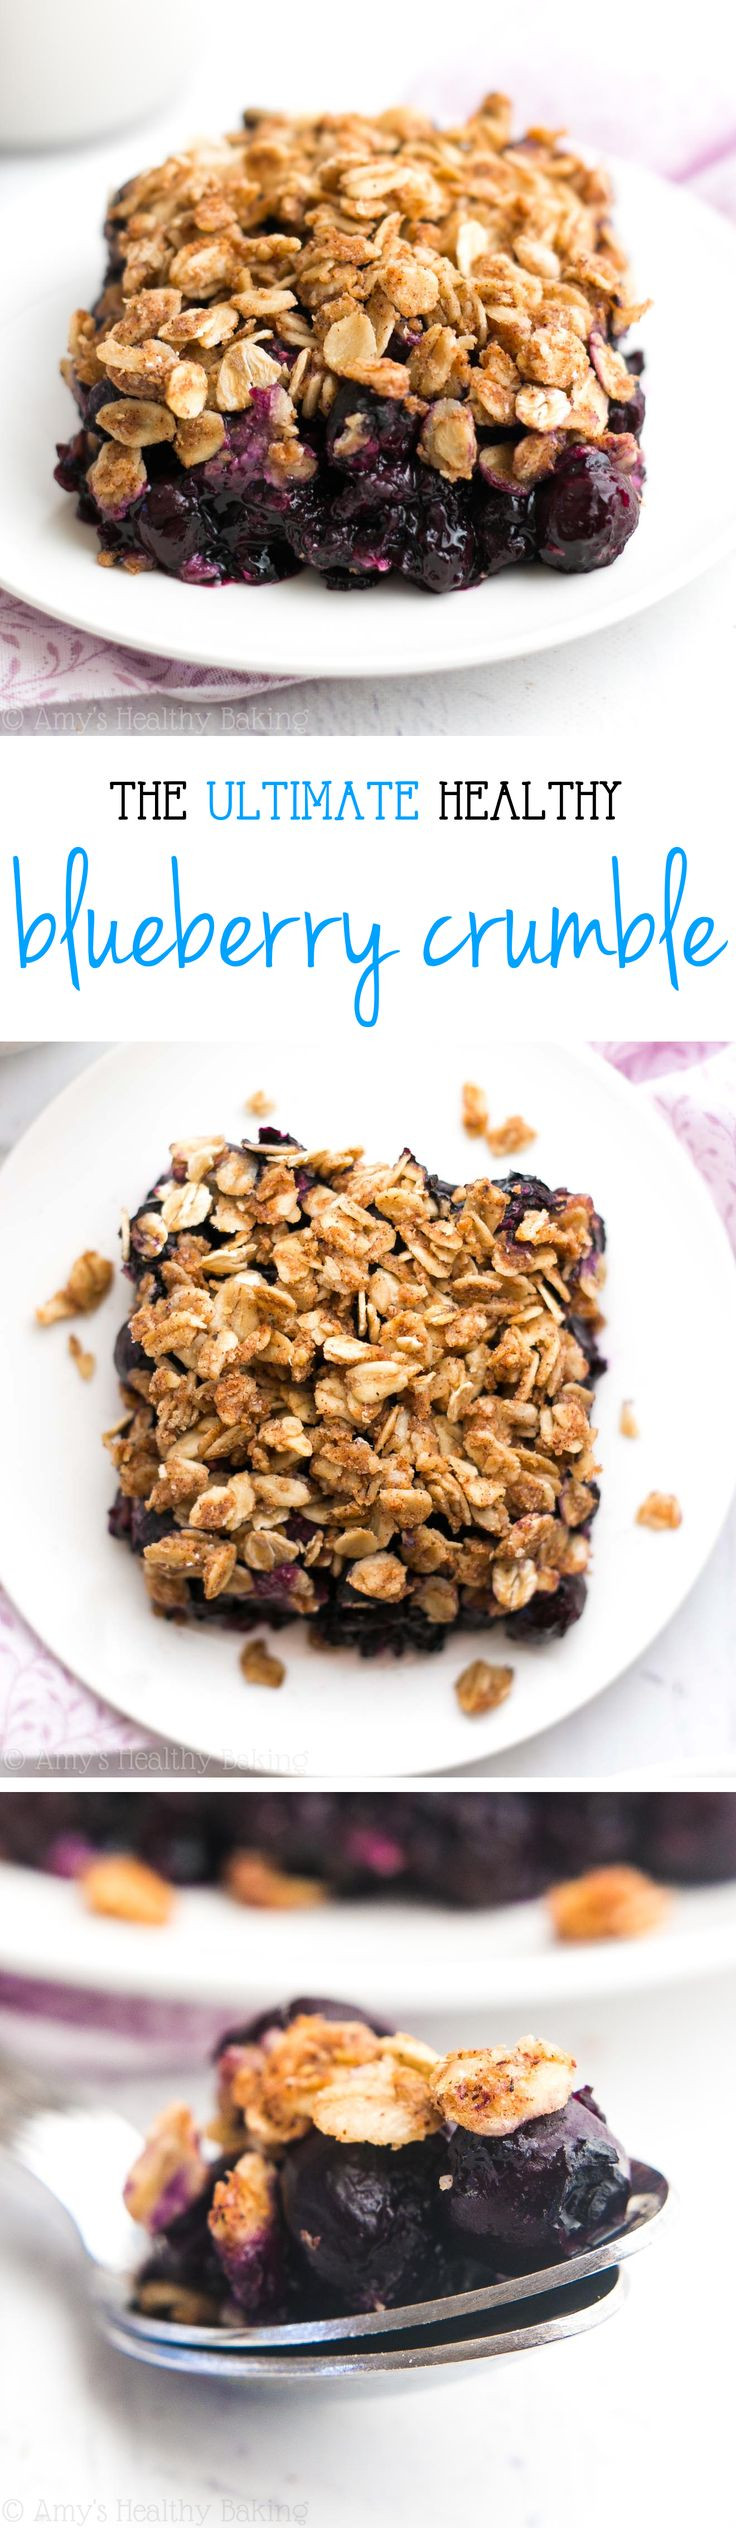 Healthy Blueberry Dessert Recipes
 25 best ideas about Healthy Blueberry Desserts on